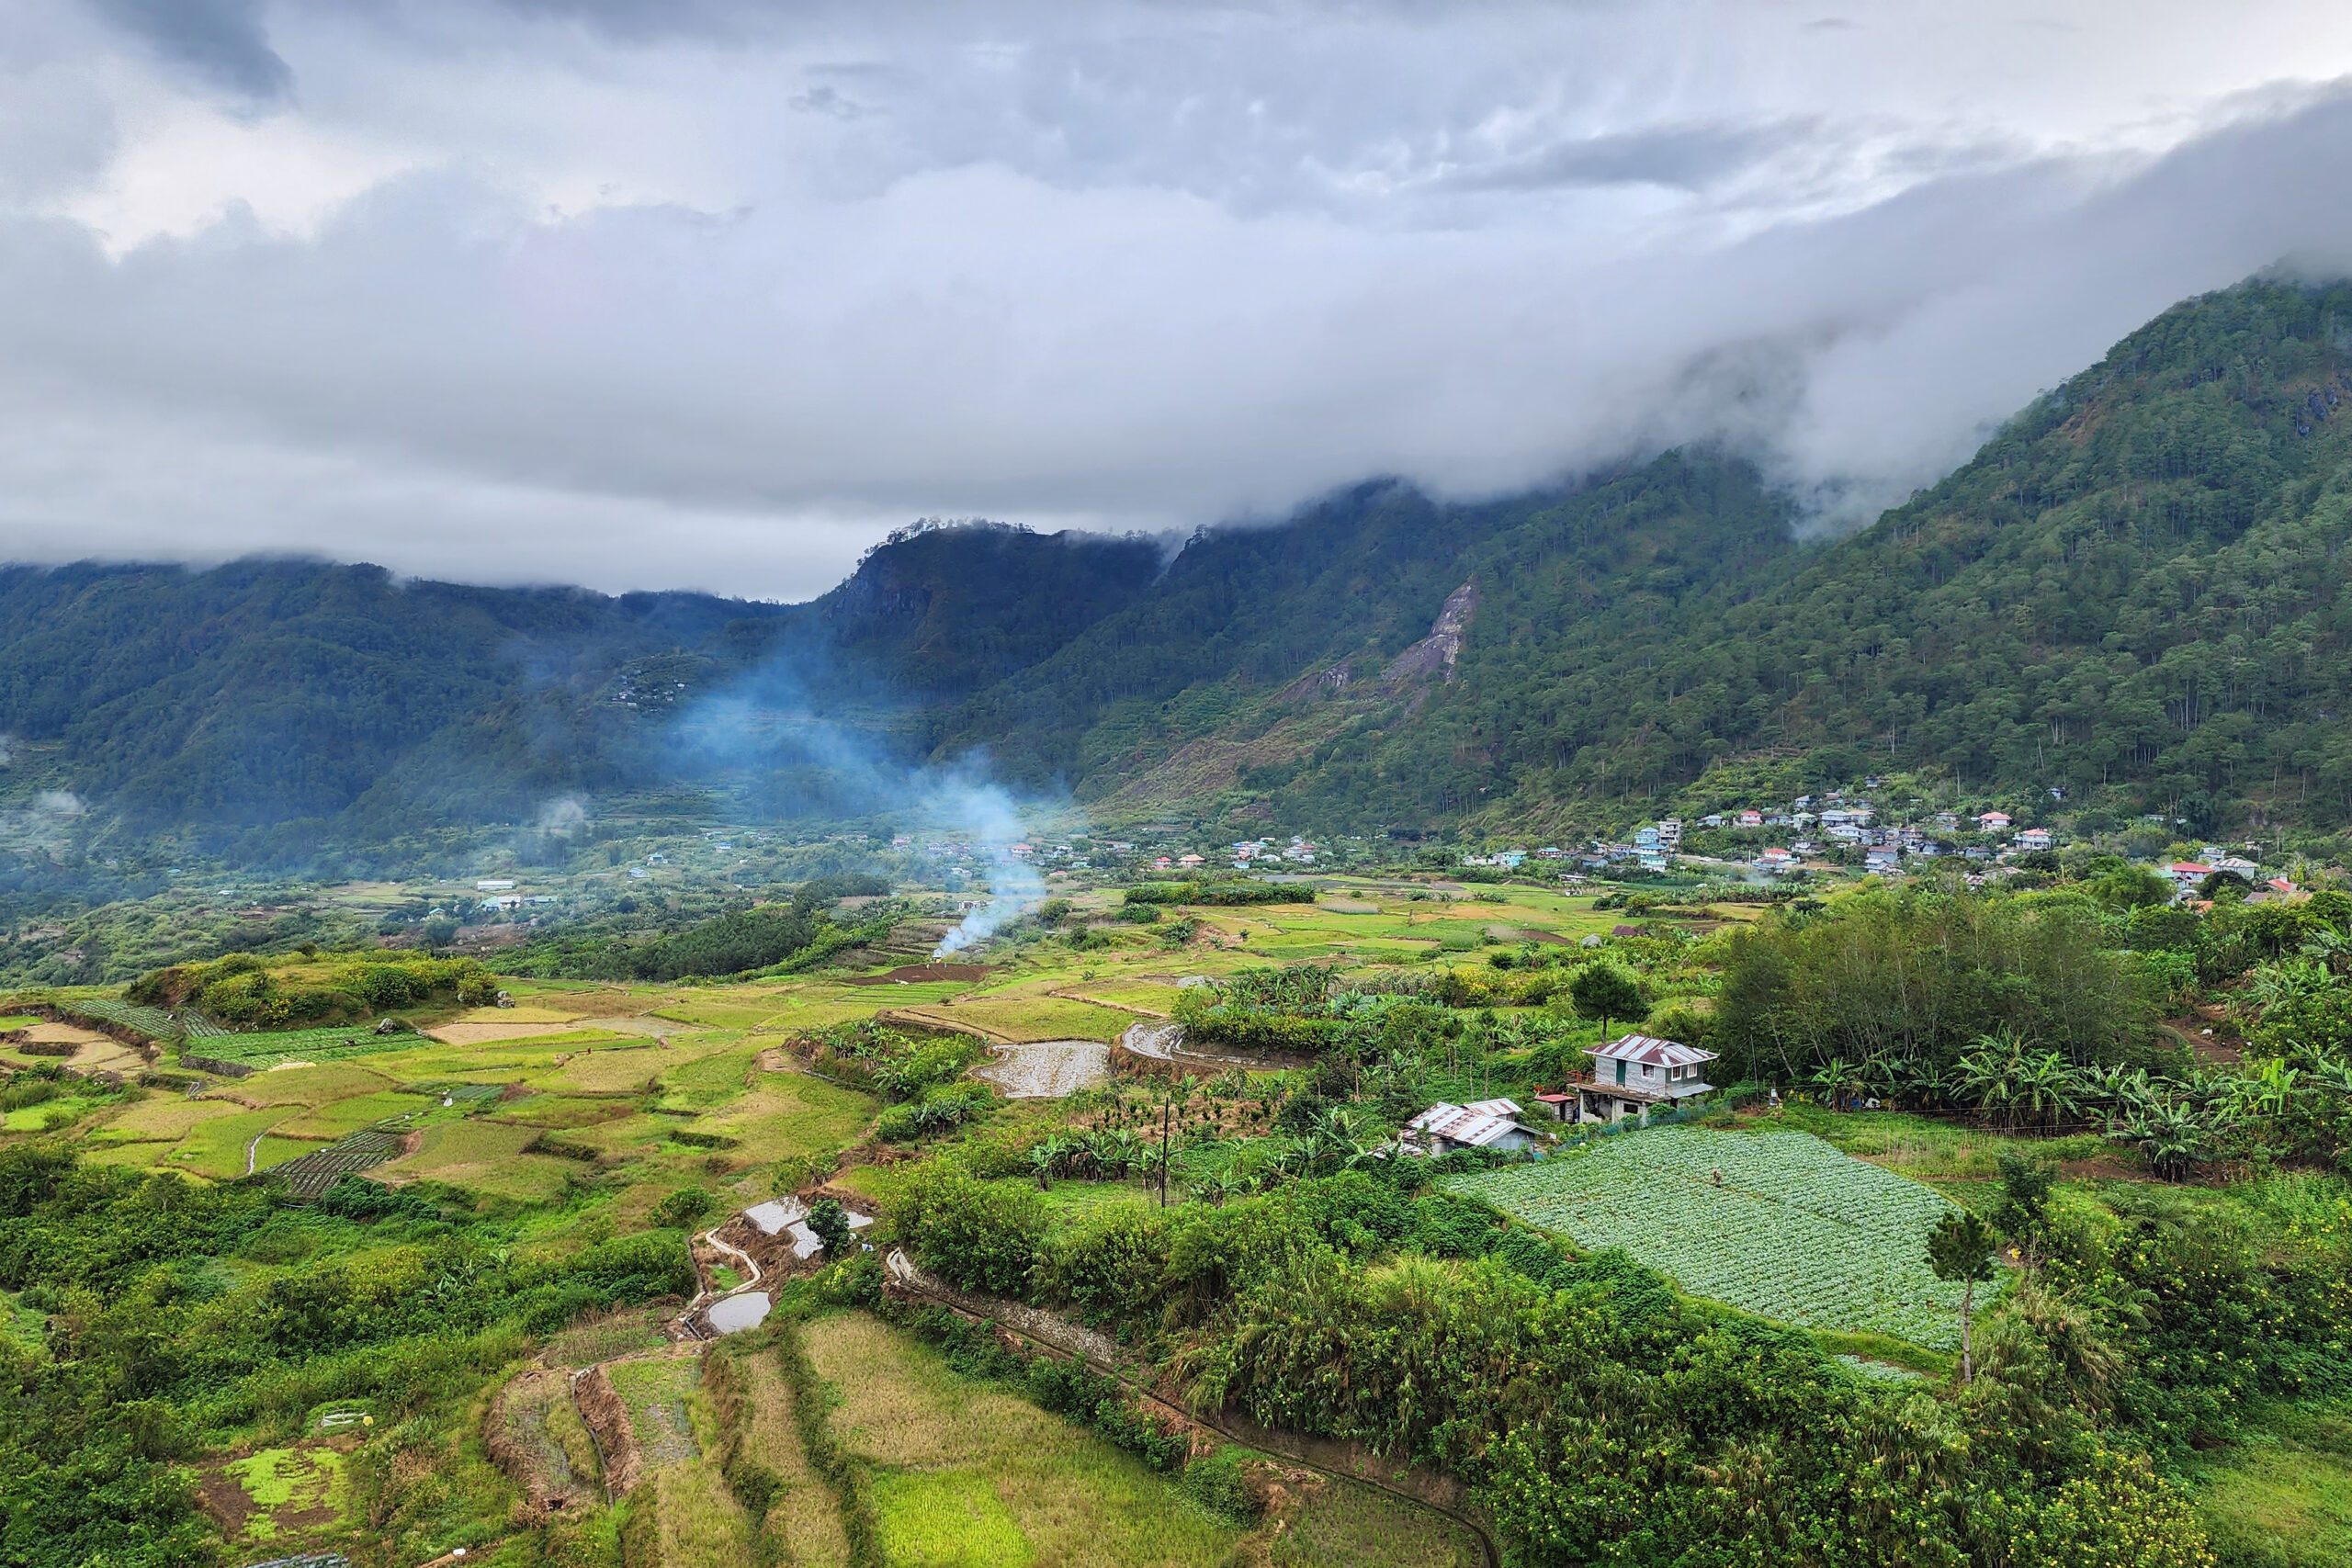 Pandemic allows Sagada to heal, build on sustainable tourism goal